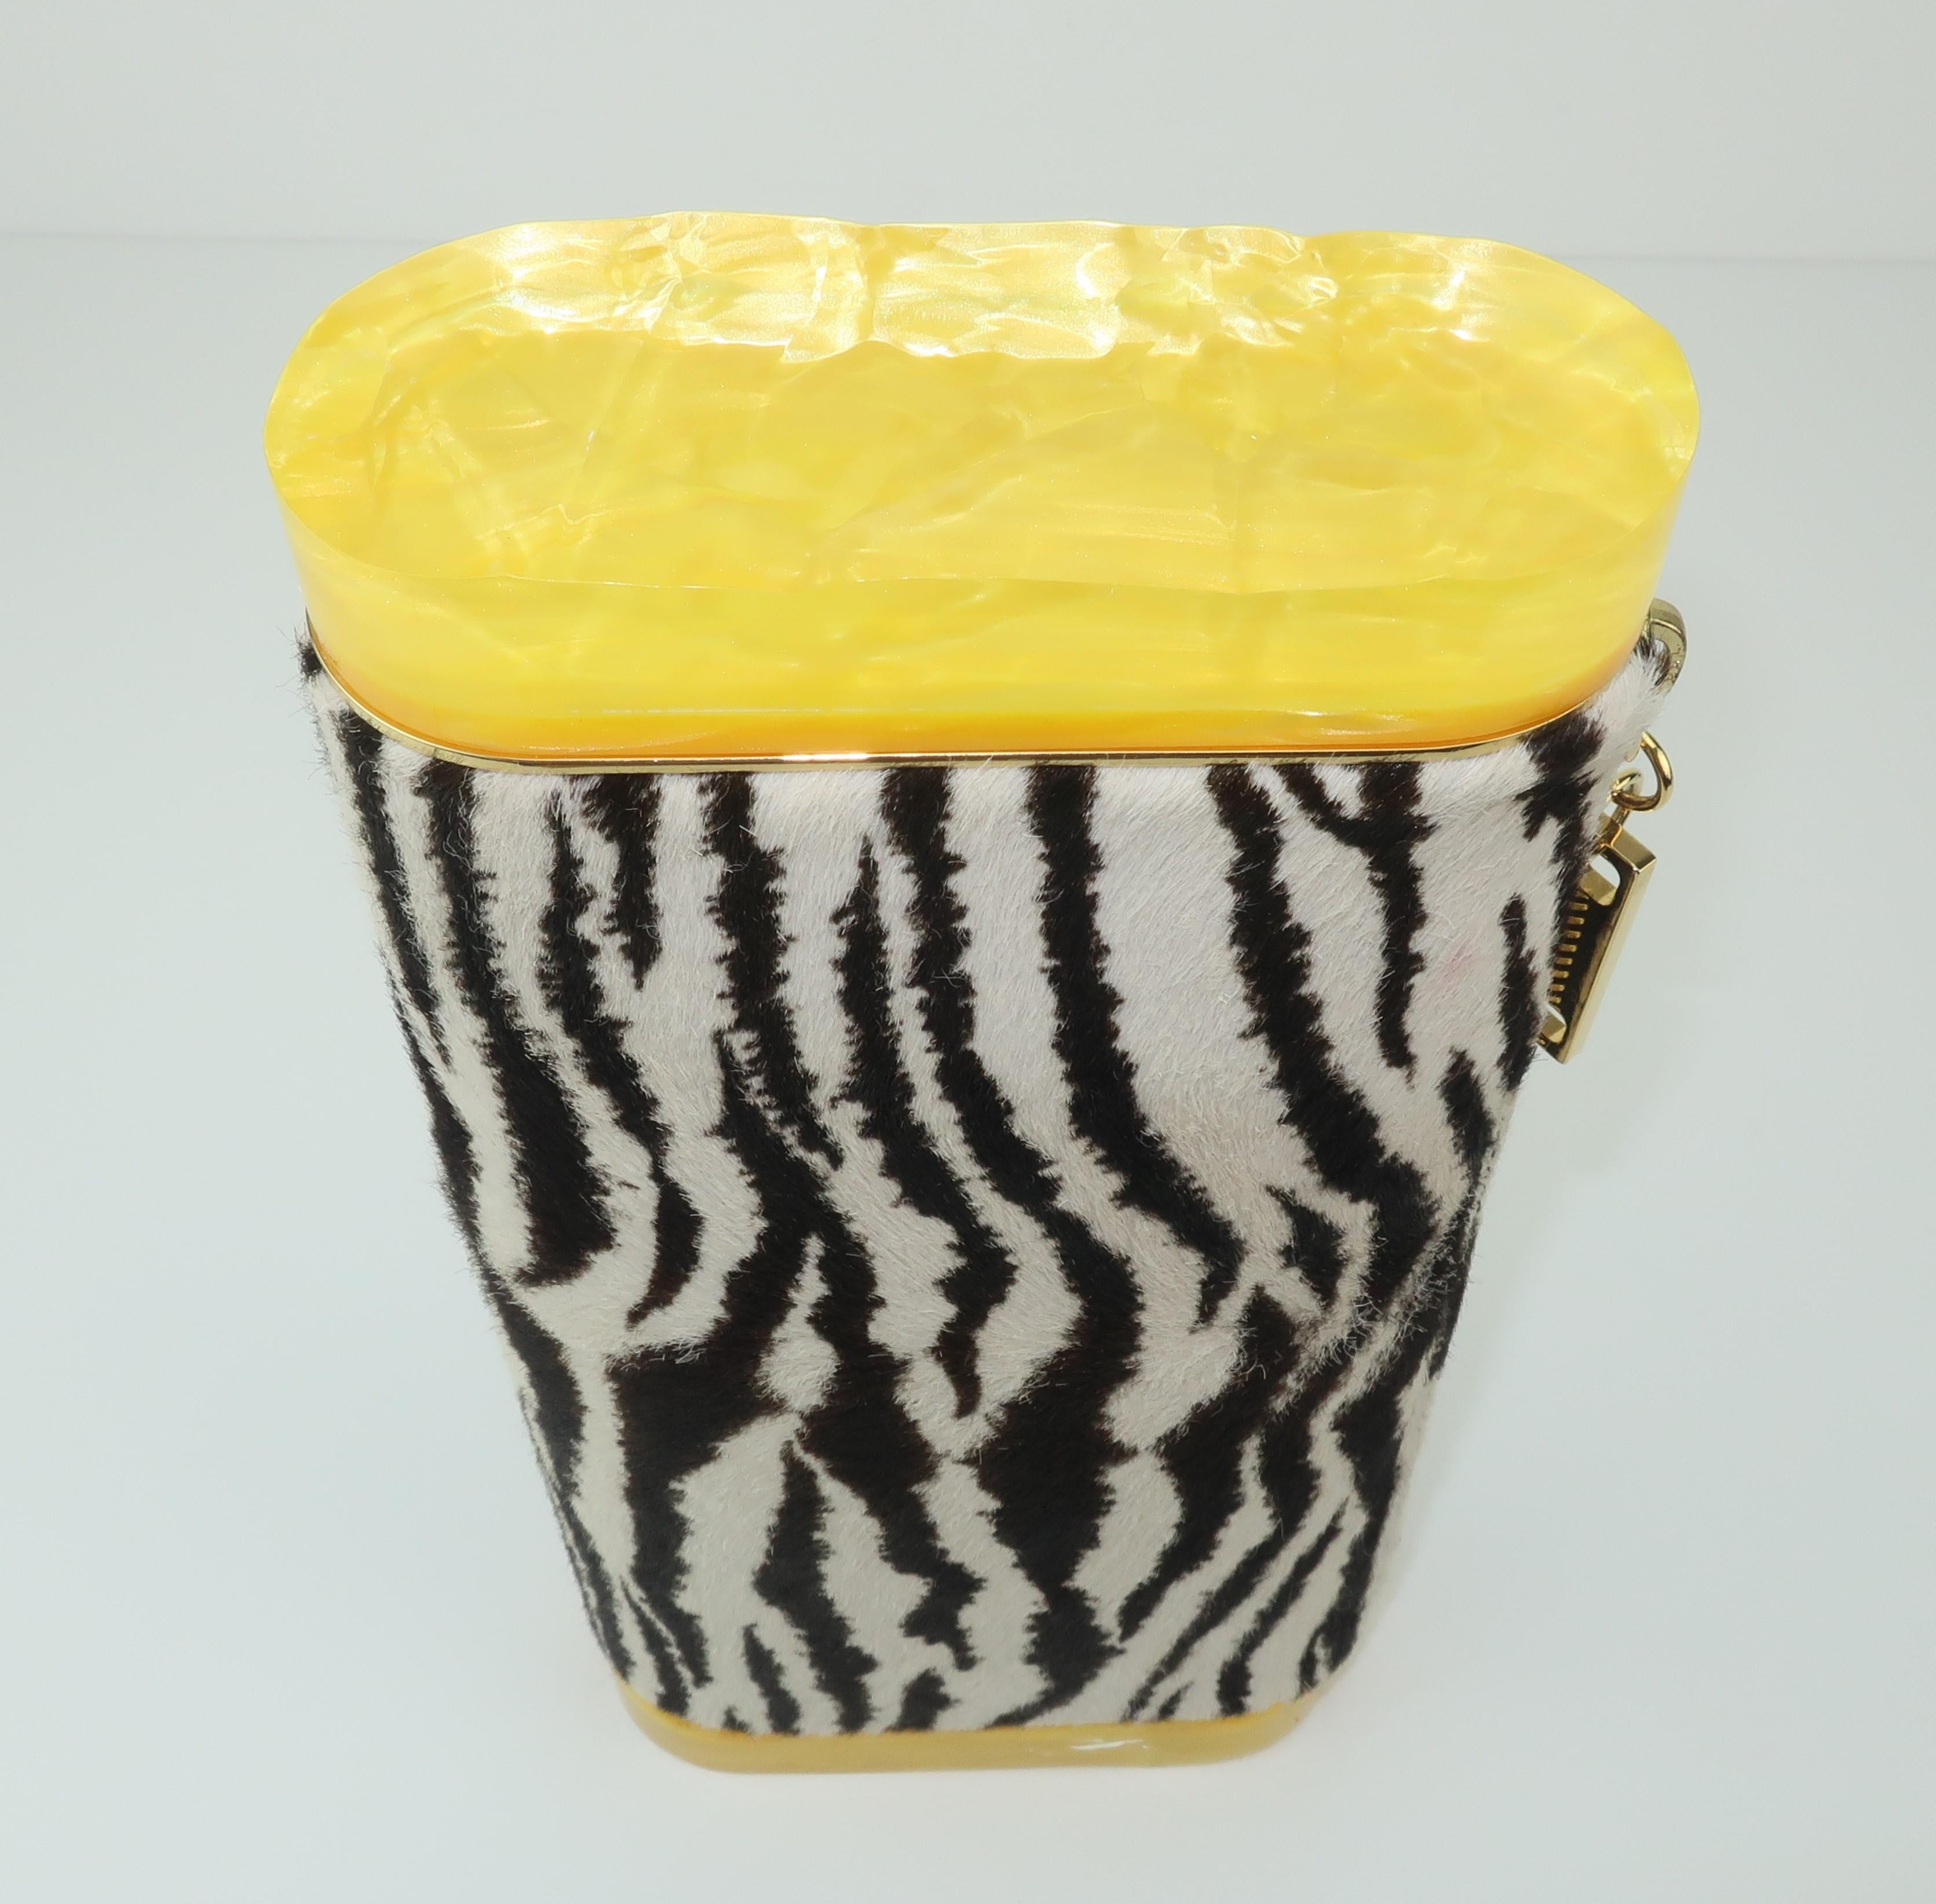 Edie Parker Zebra Print Calf Hair Clutch Handbag With Acrylic Details 2